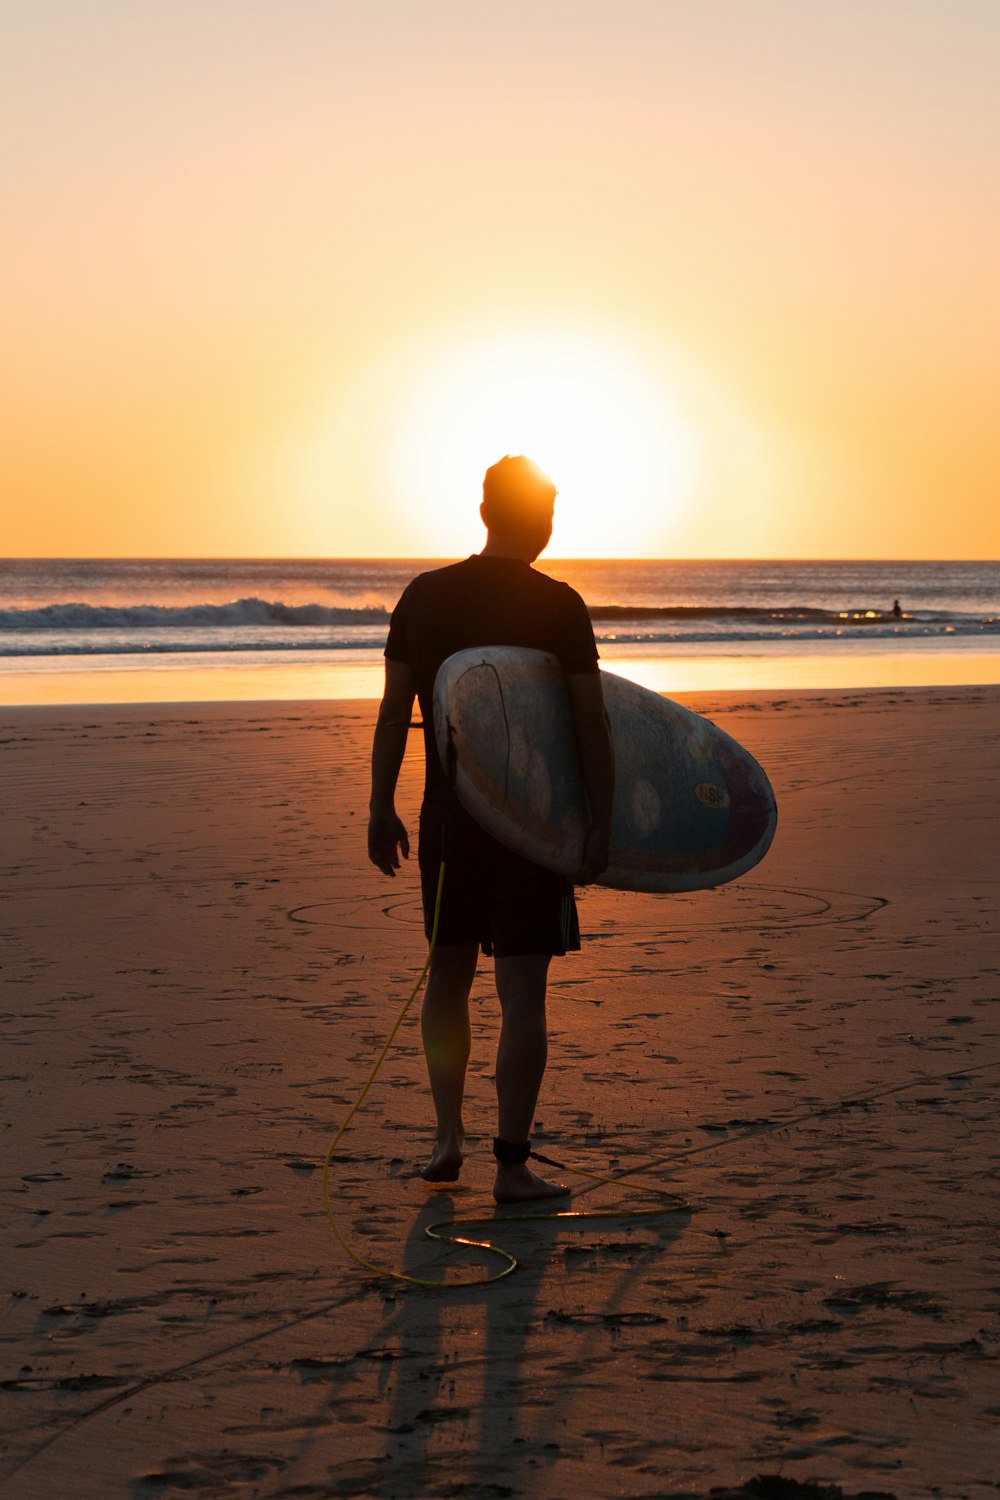 a man holding a surfboard on top of a sandy beach